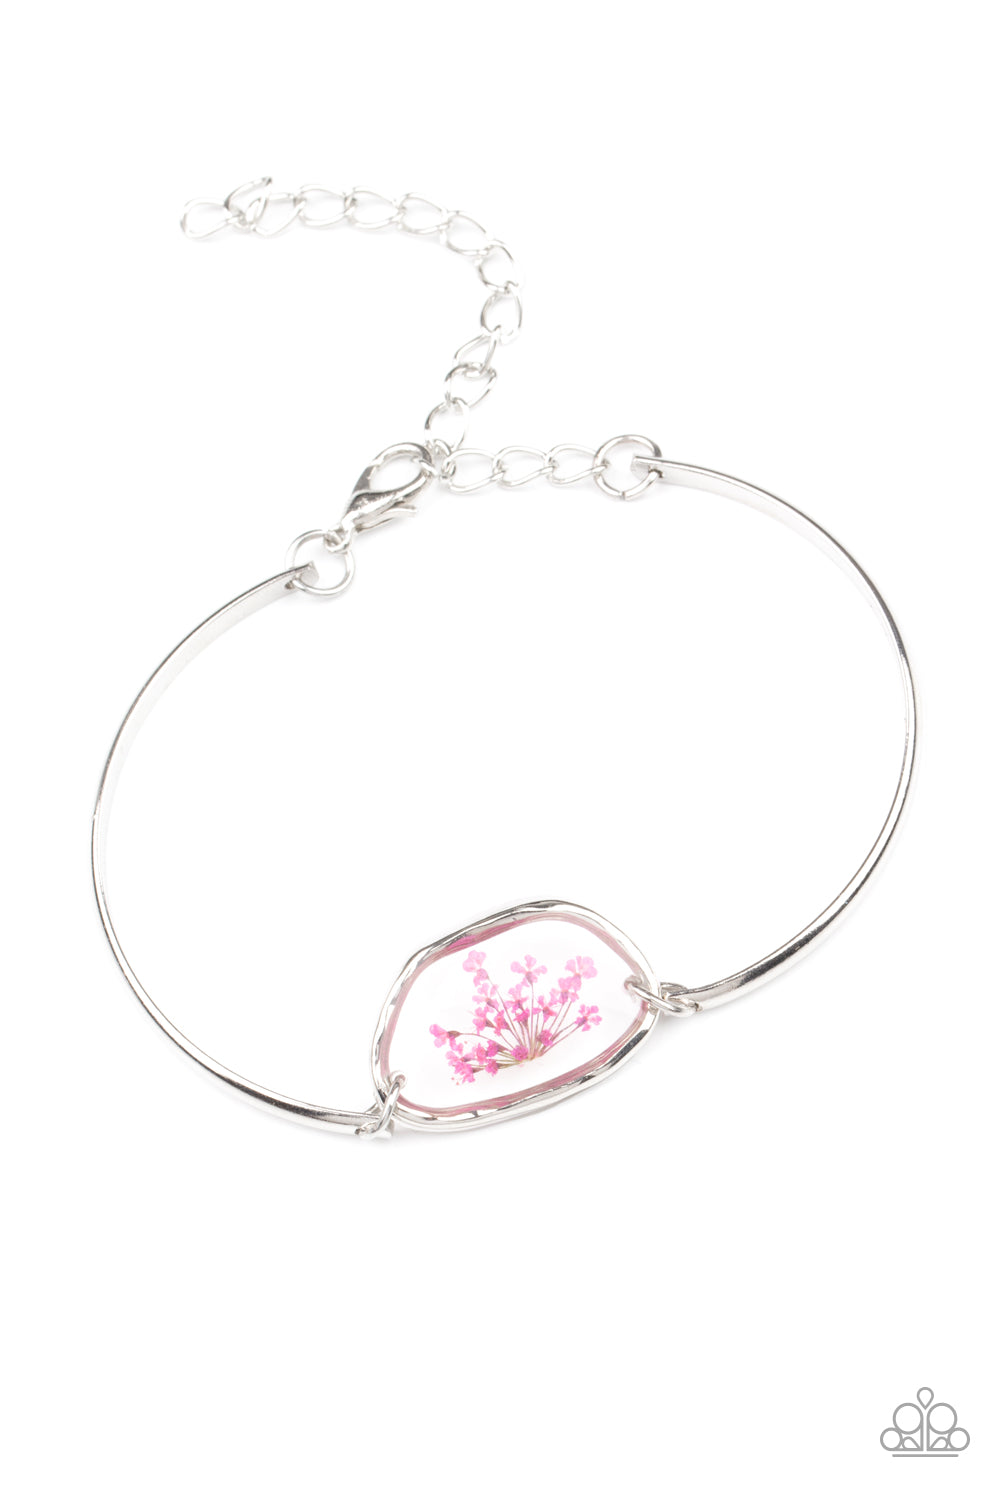 Prairie Paradise Pink Dainty Floral Bracelet Paparazzi Accessories.#P9DA-PKXX-078XX. Free Shipping